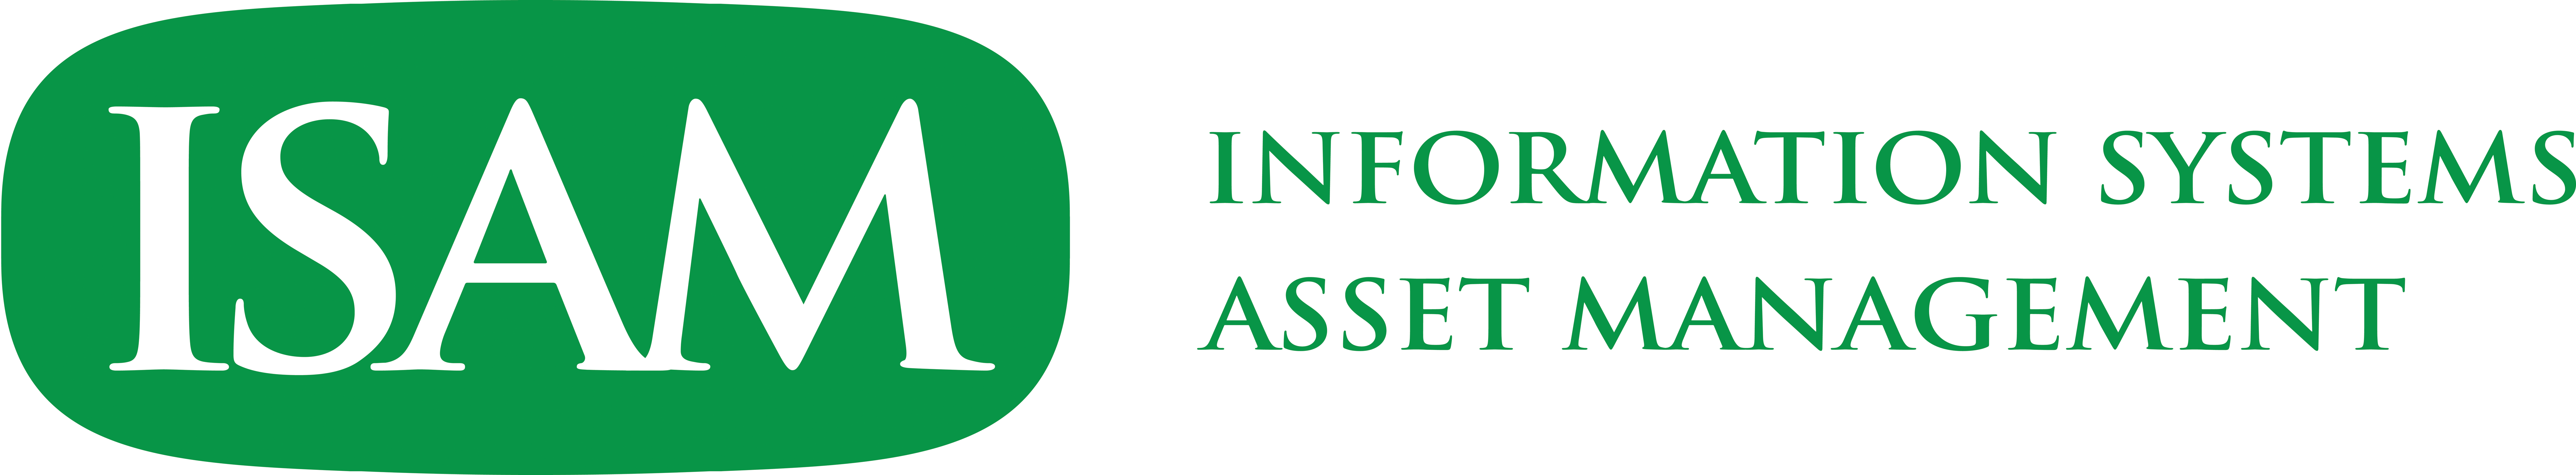 ISAM - Information Systems Asset Management